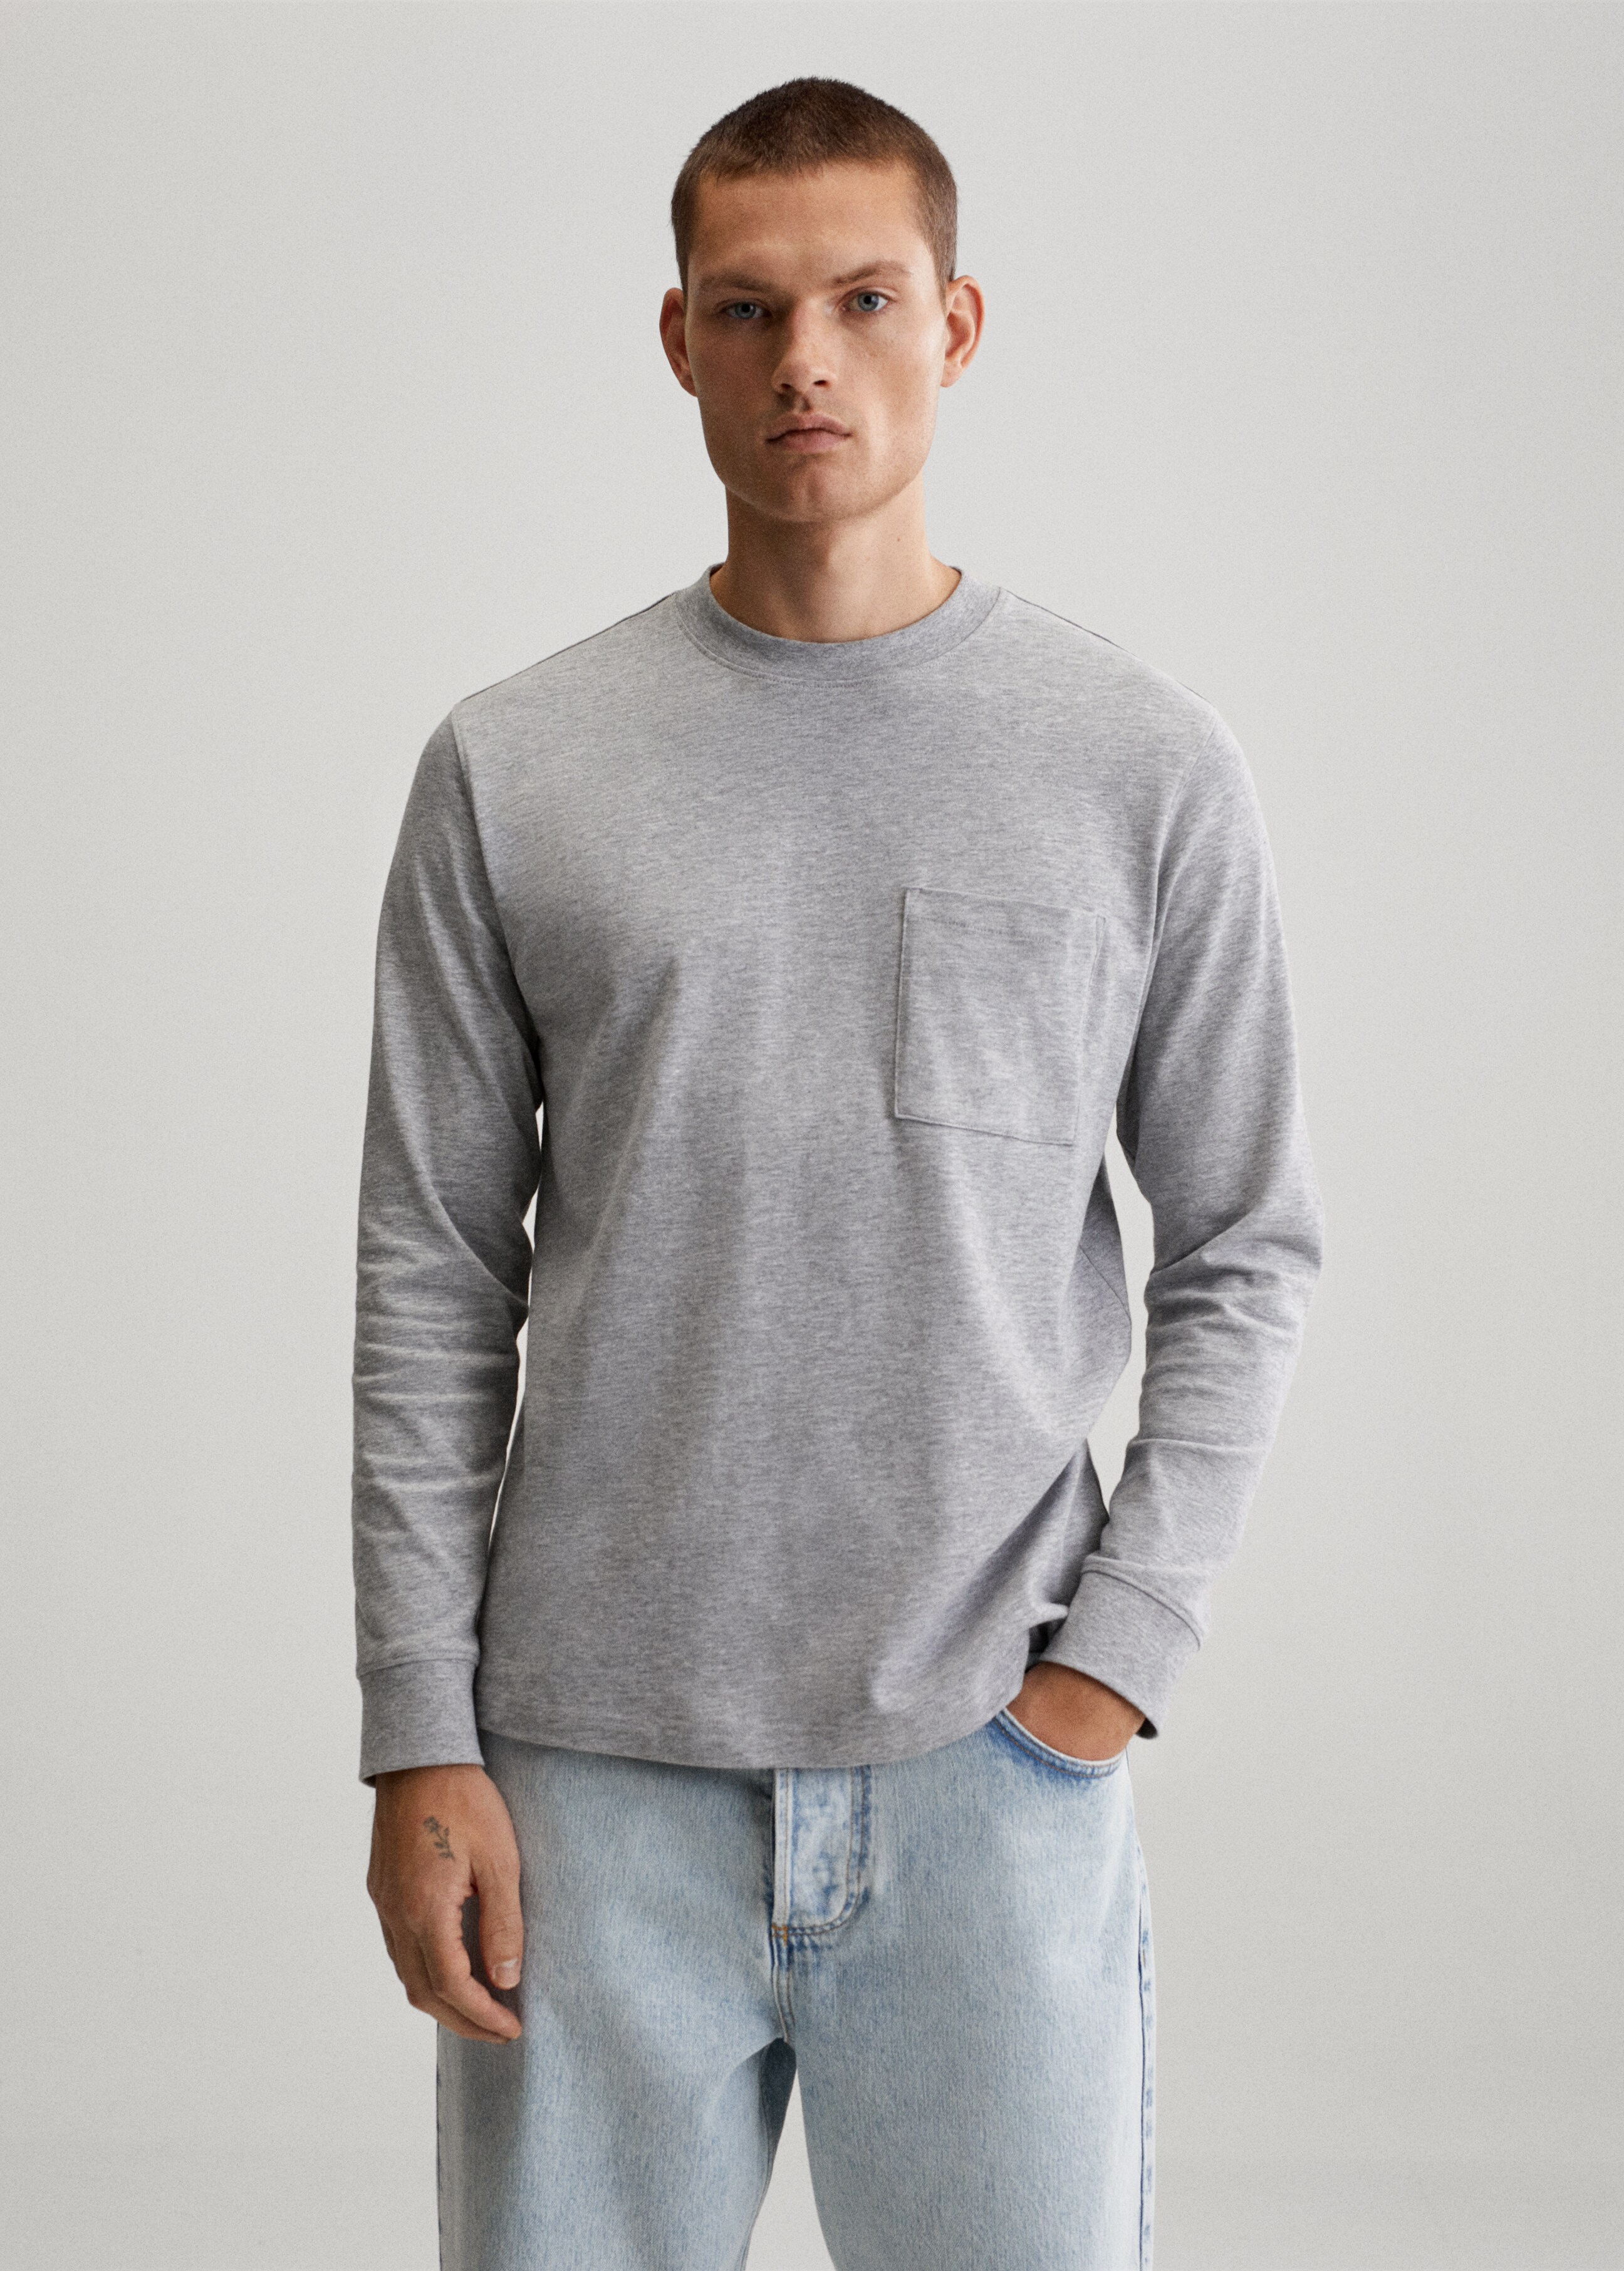 Tiago long sleeve t-shirt - Medium plane